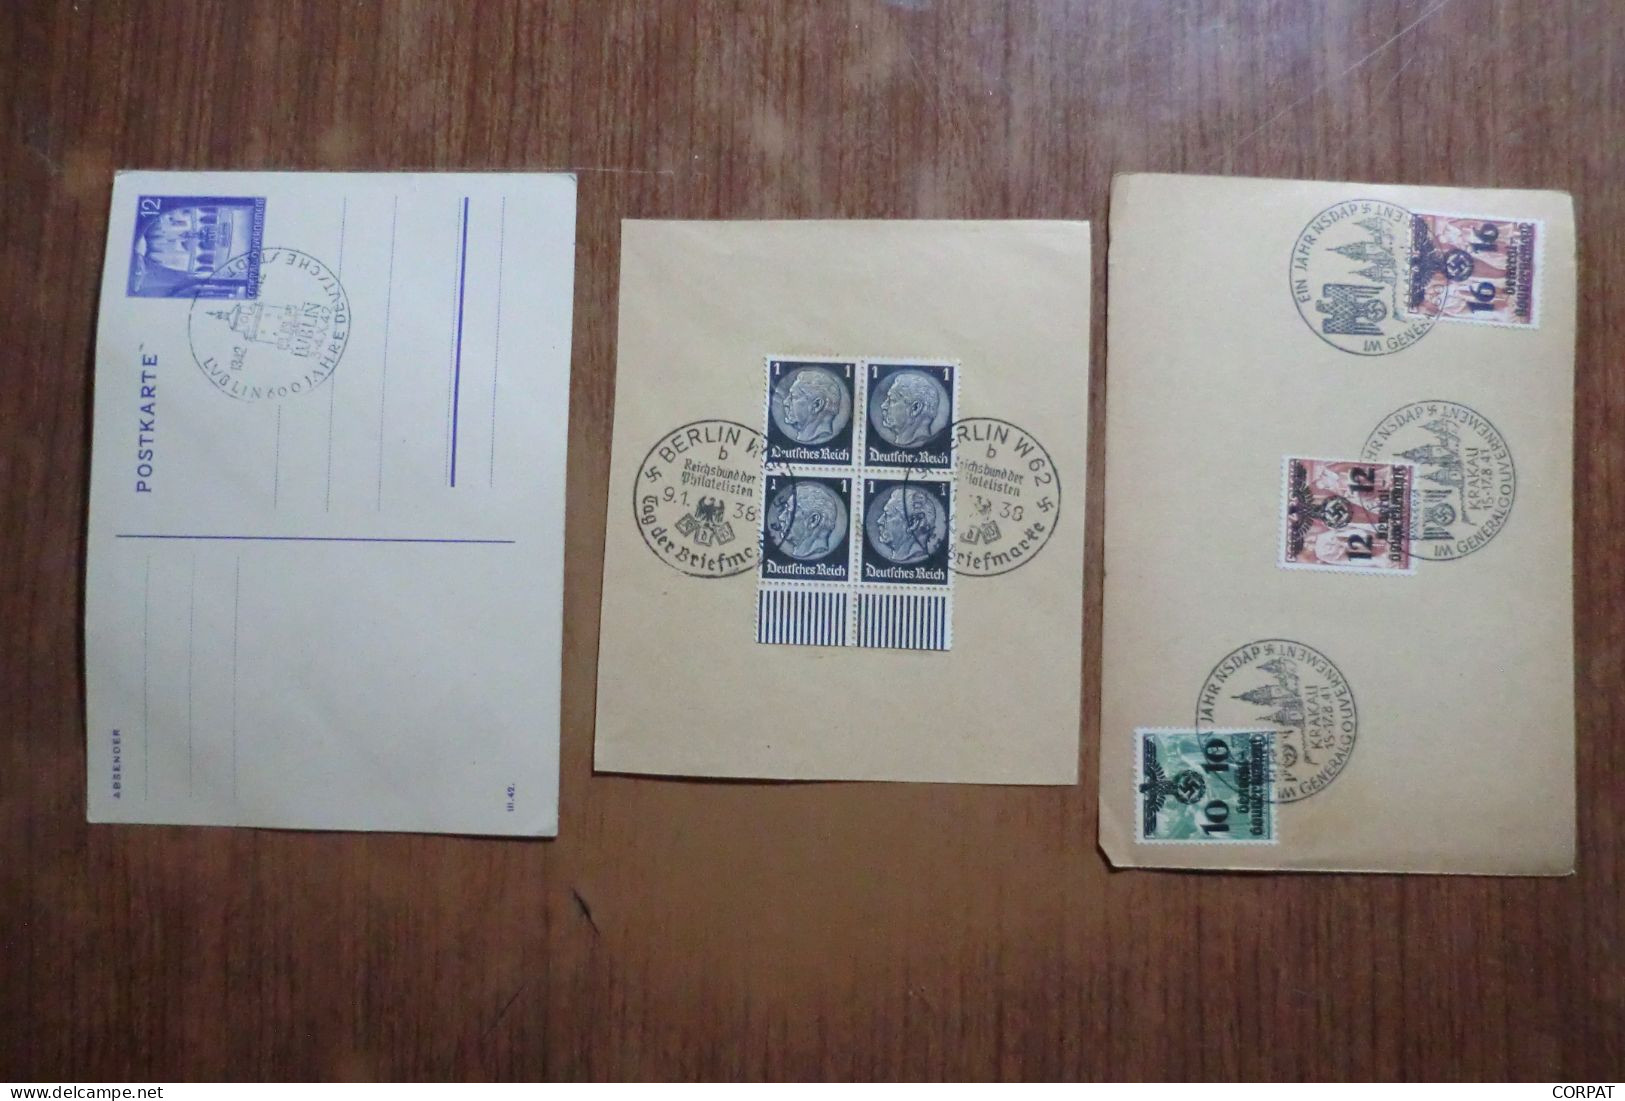 Germany:postcards,envelopes,folders ecc.